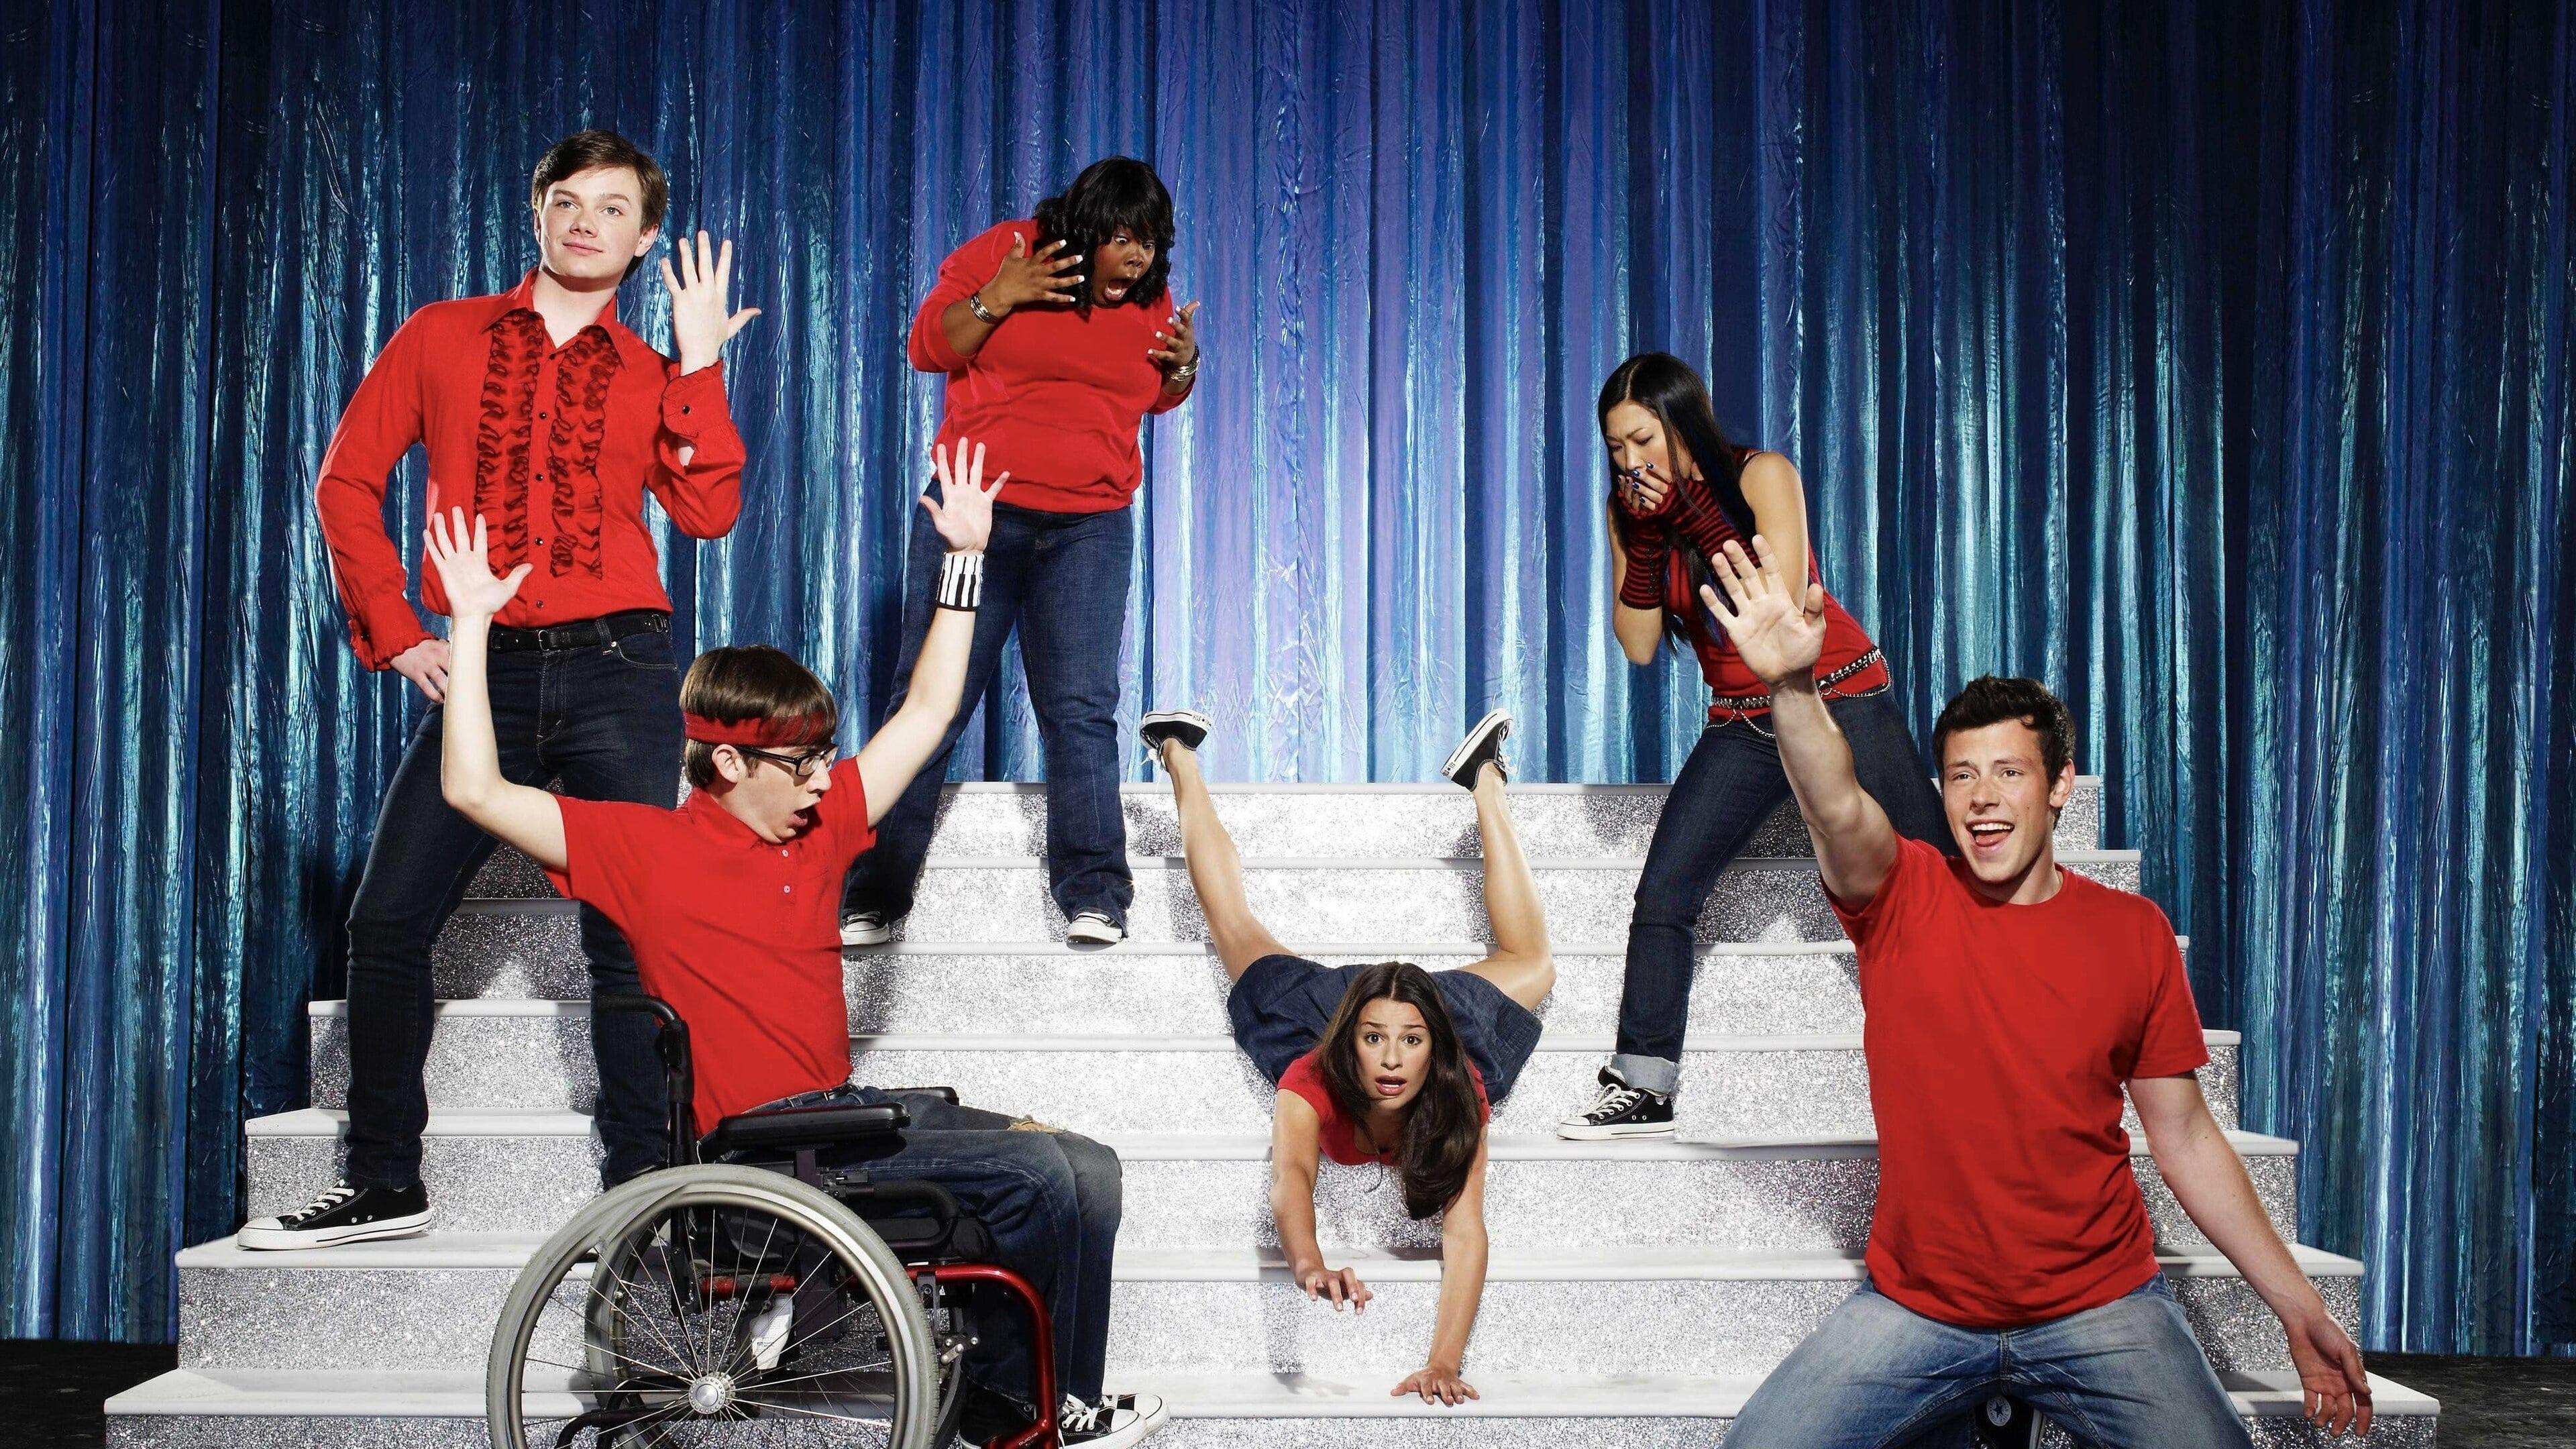 Glee: Keep on Believin' backdrop